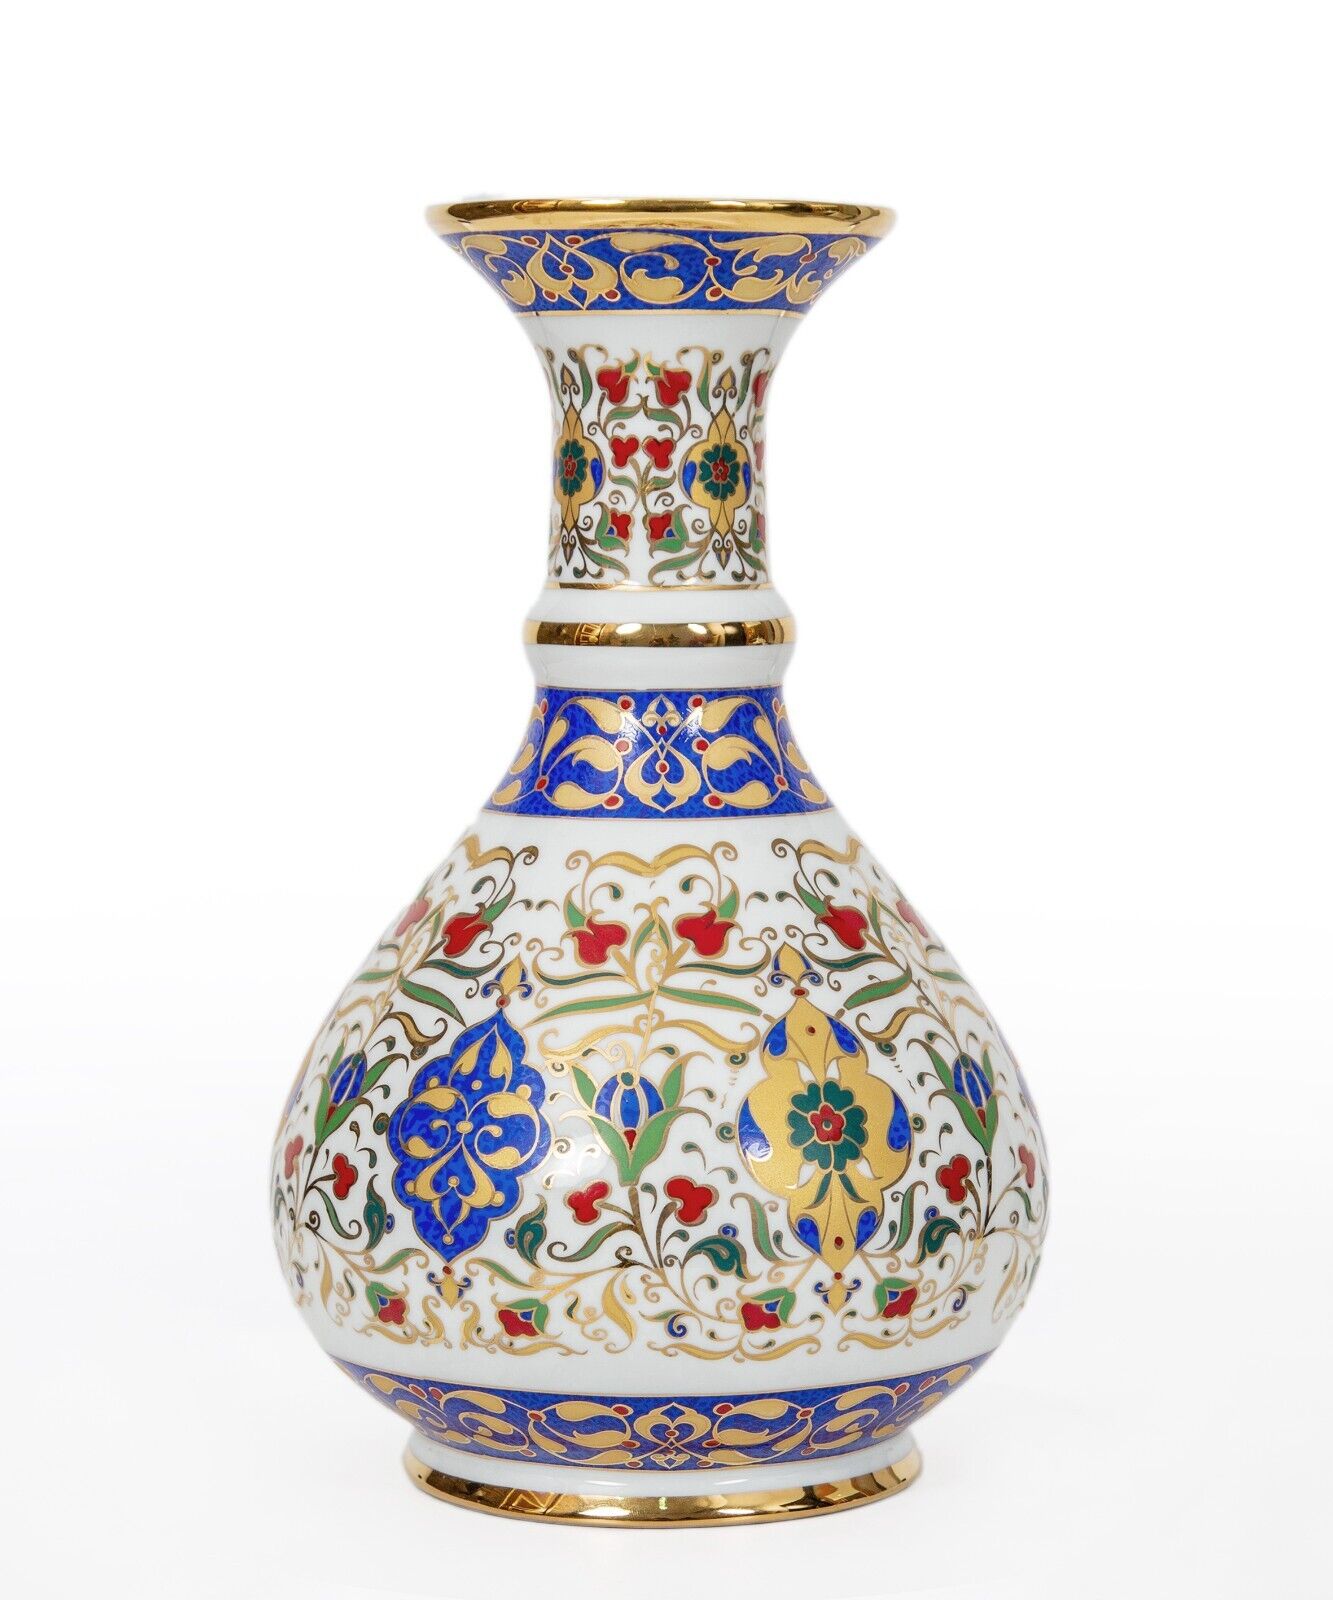 Antique Hand Painted Turkish Porcelain Vases Blue Gold Vintage Home Decor 6 inch